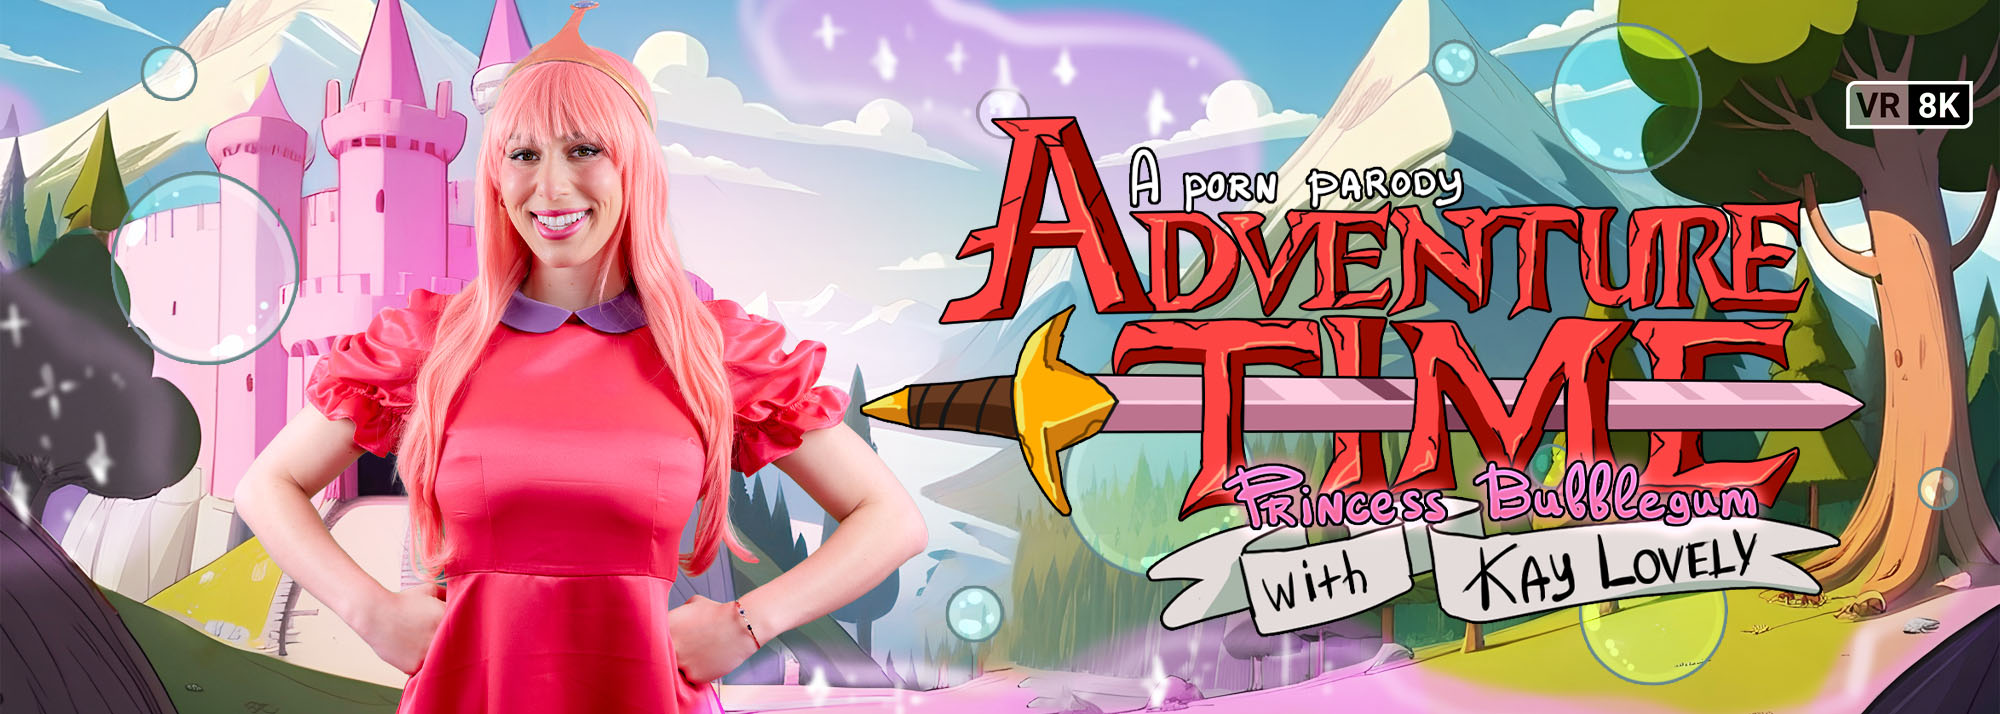 Adventure Time: Princess Bubblegum (A Porn Parody) Slideshow